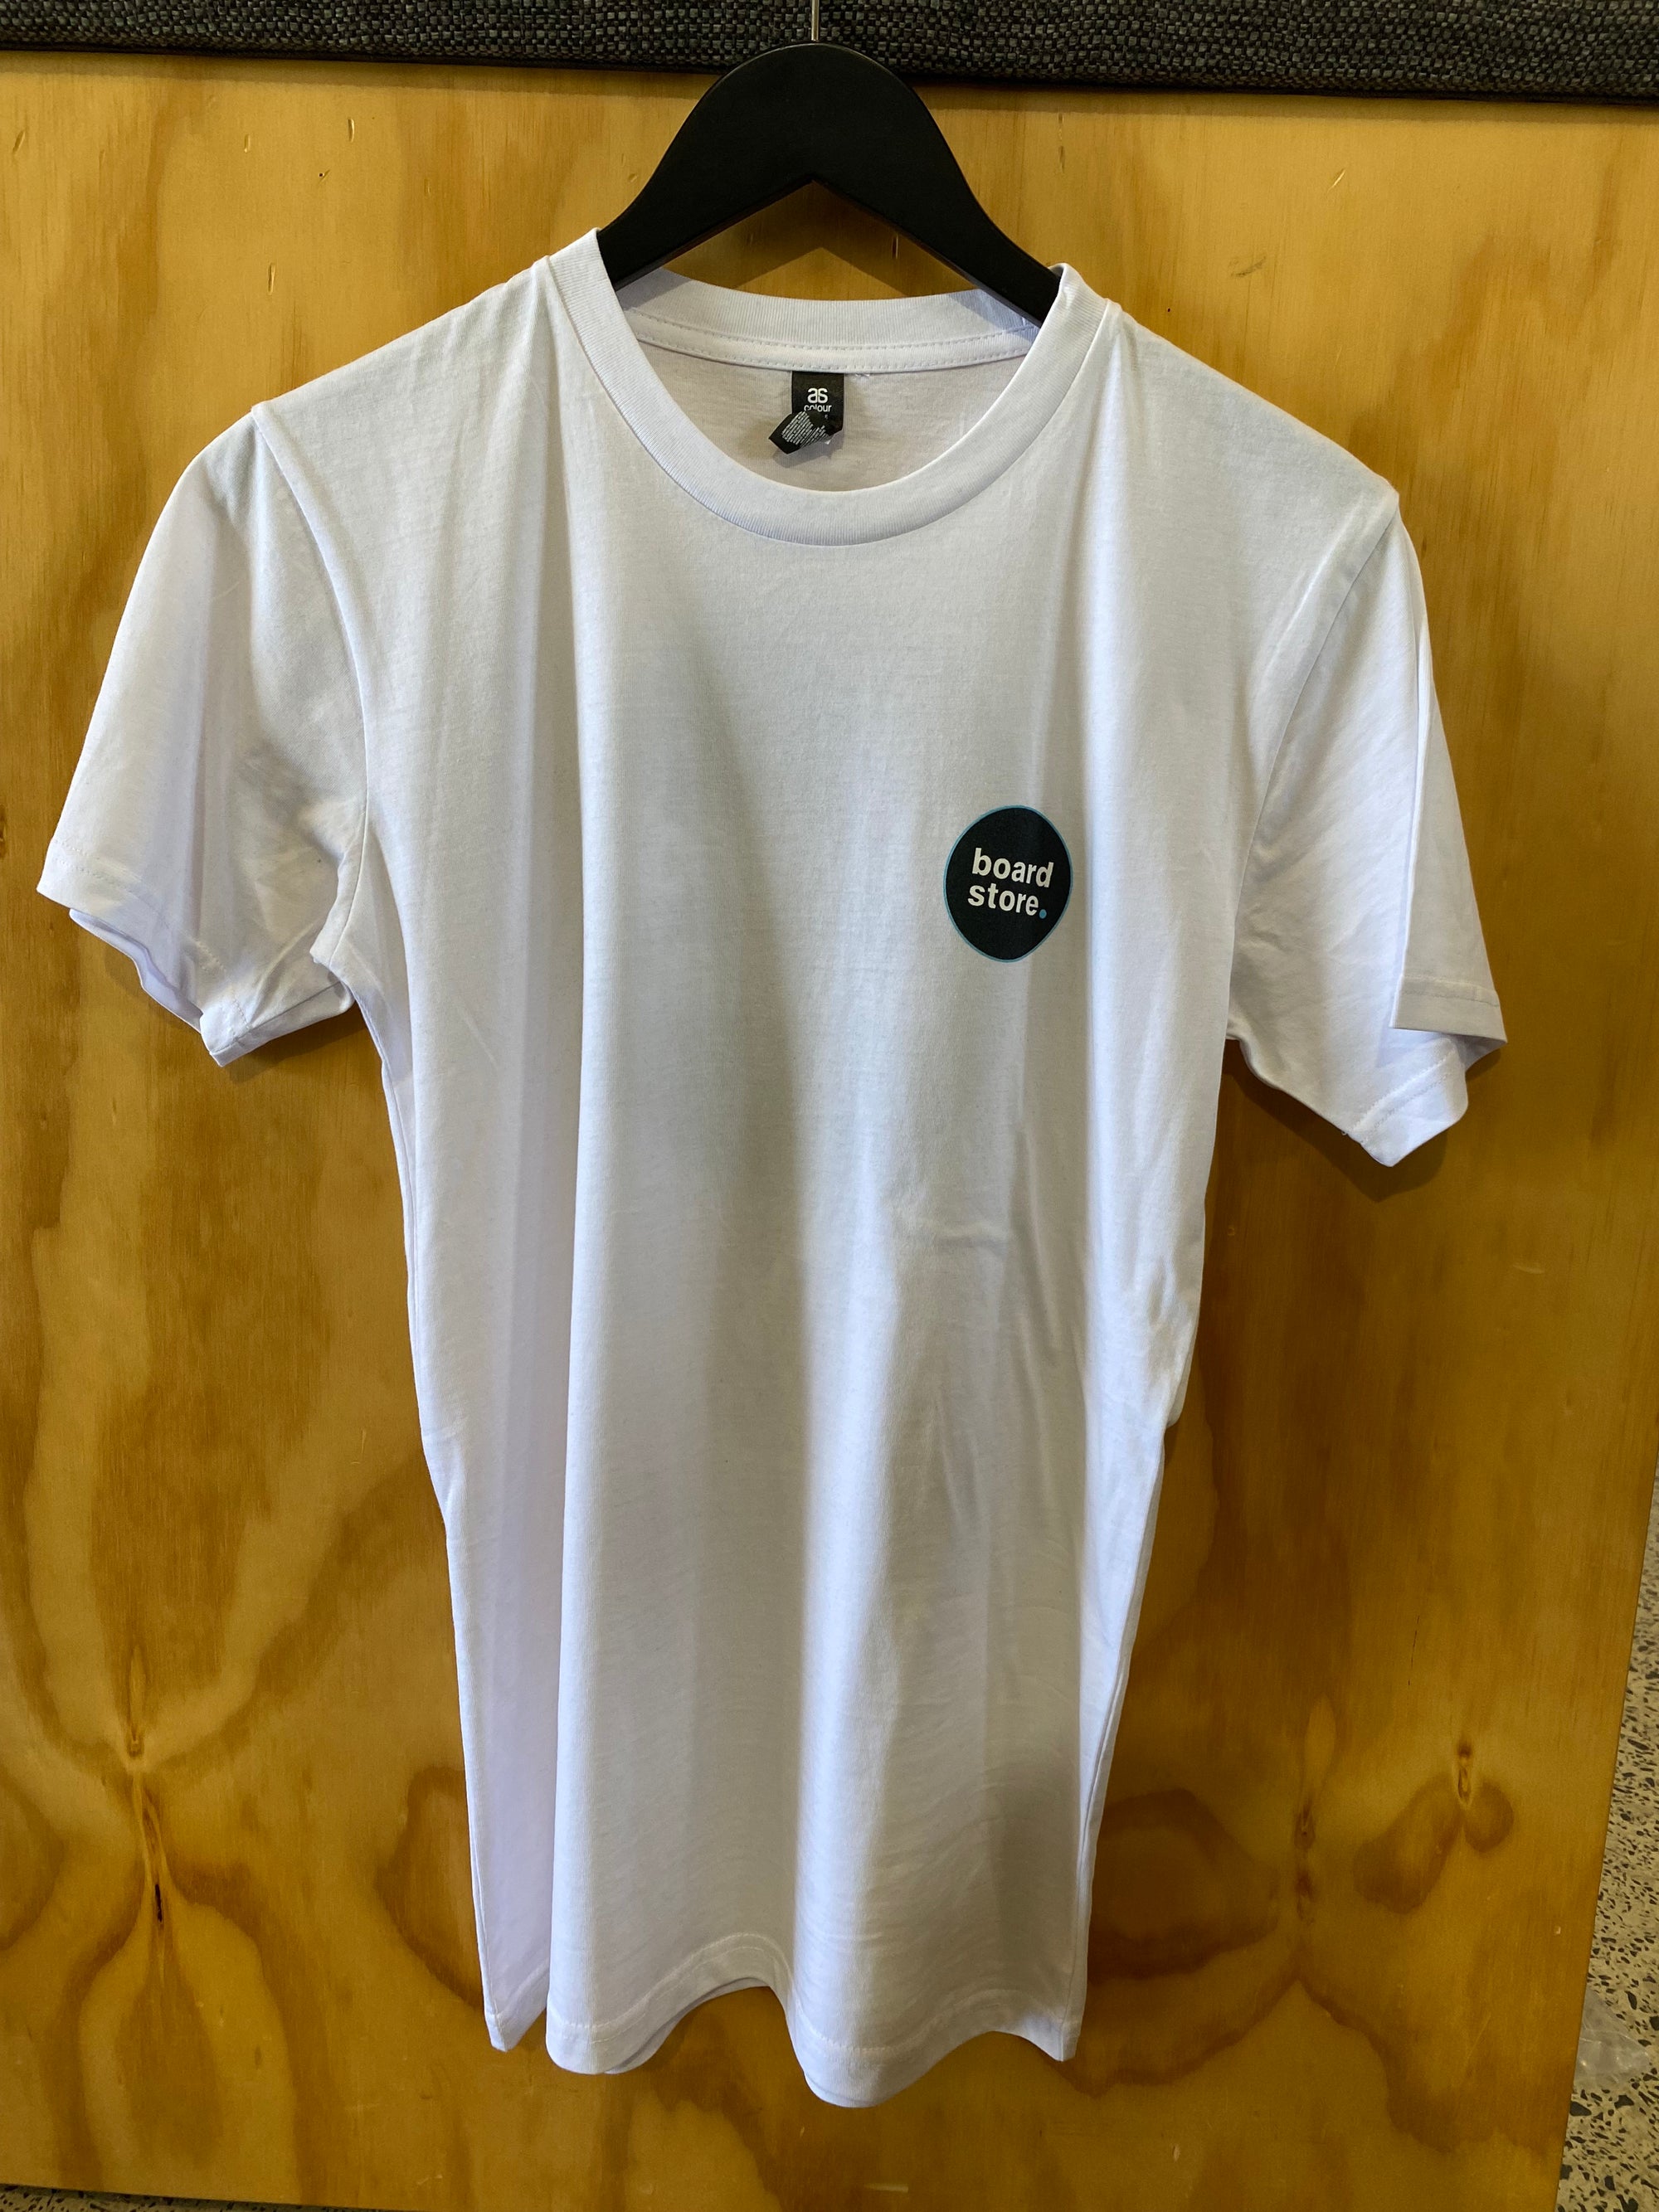 Boardstore circle logo Tee (NEW)- WHITE - Board Store Board StoreTee Shirt  